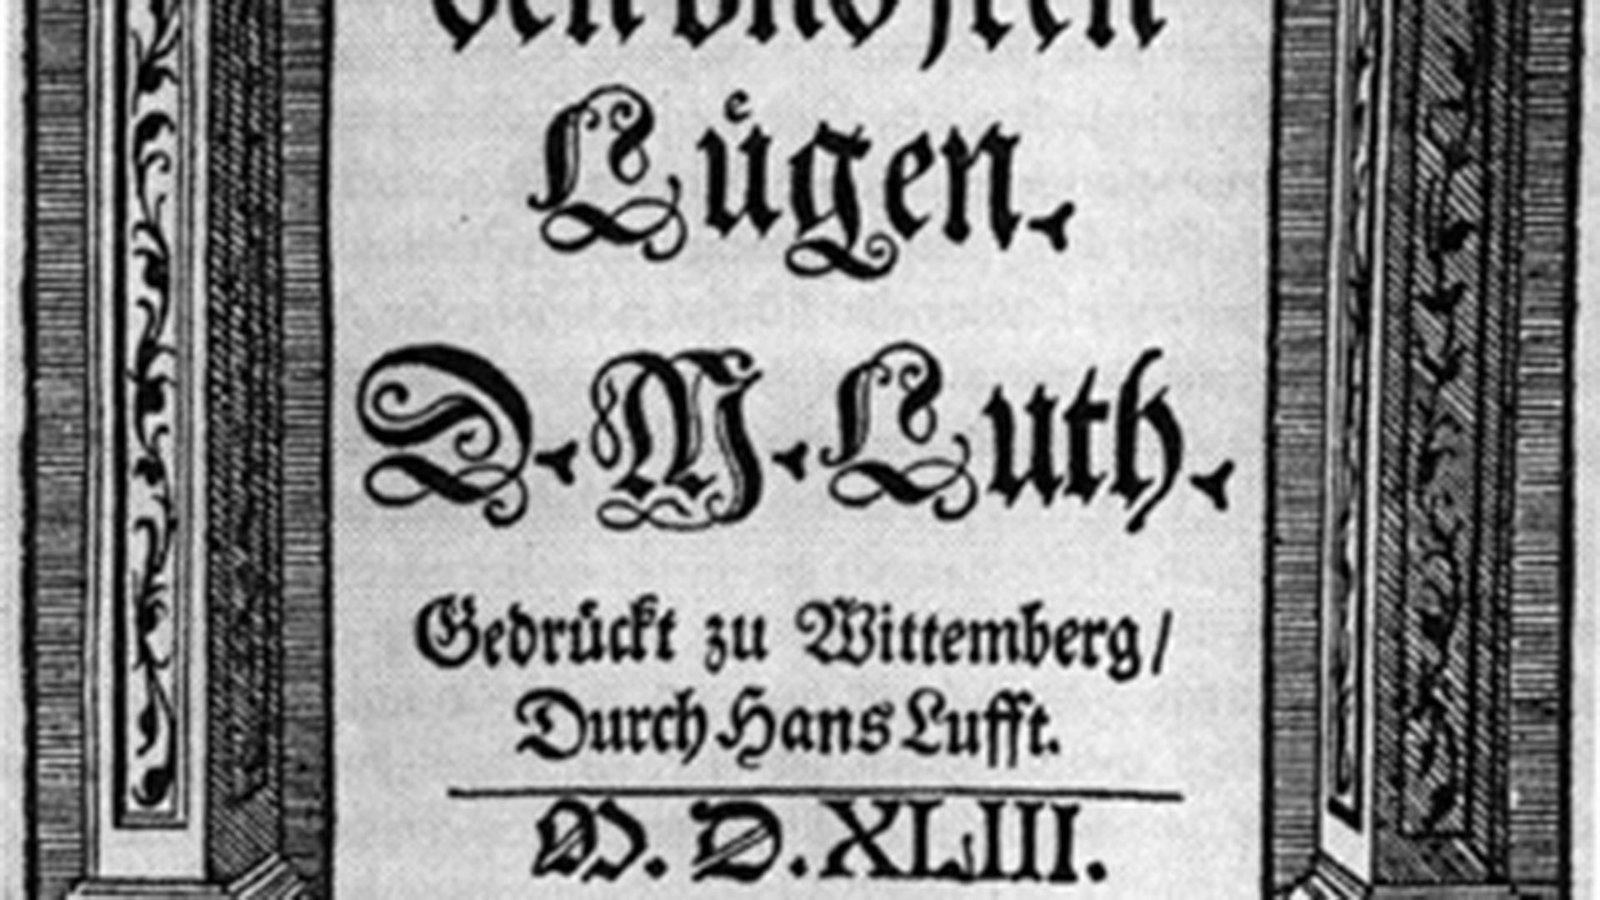 Lutero, anti-semitismo e nazismo, e como tudo começou